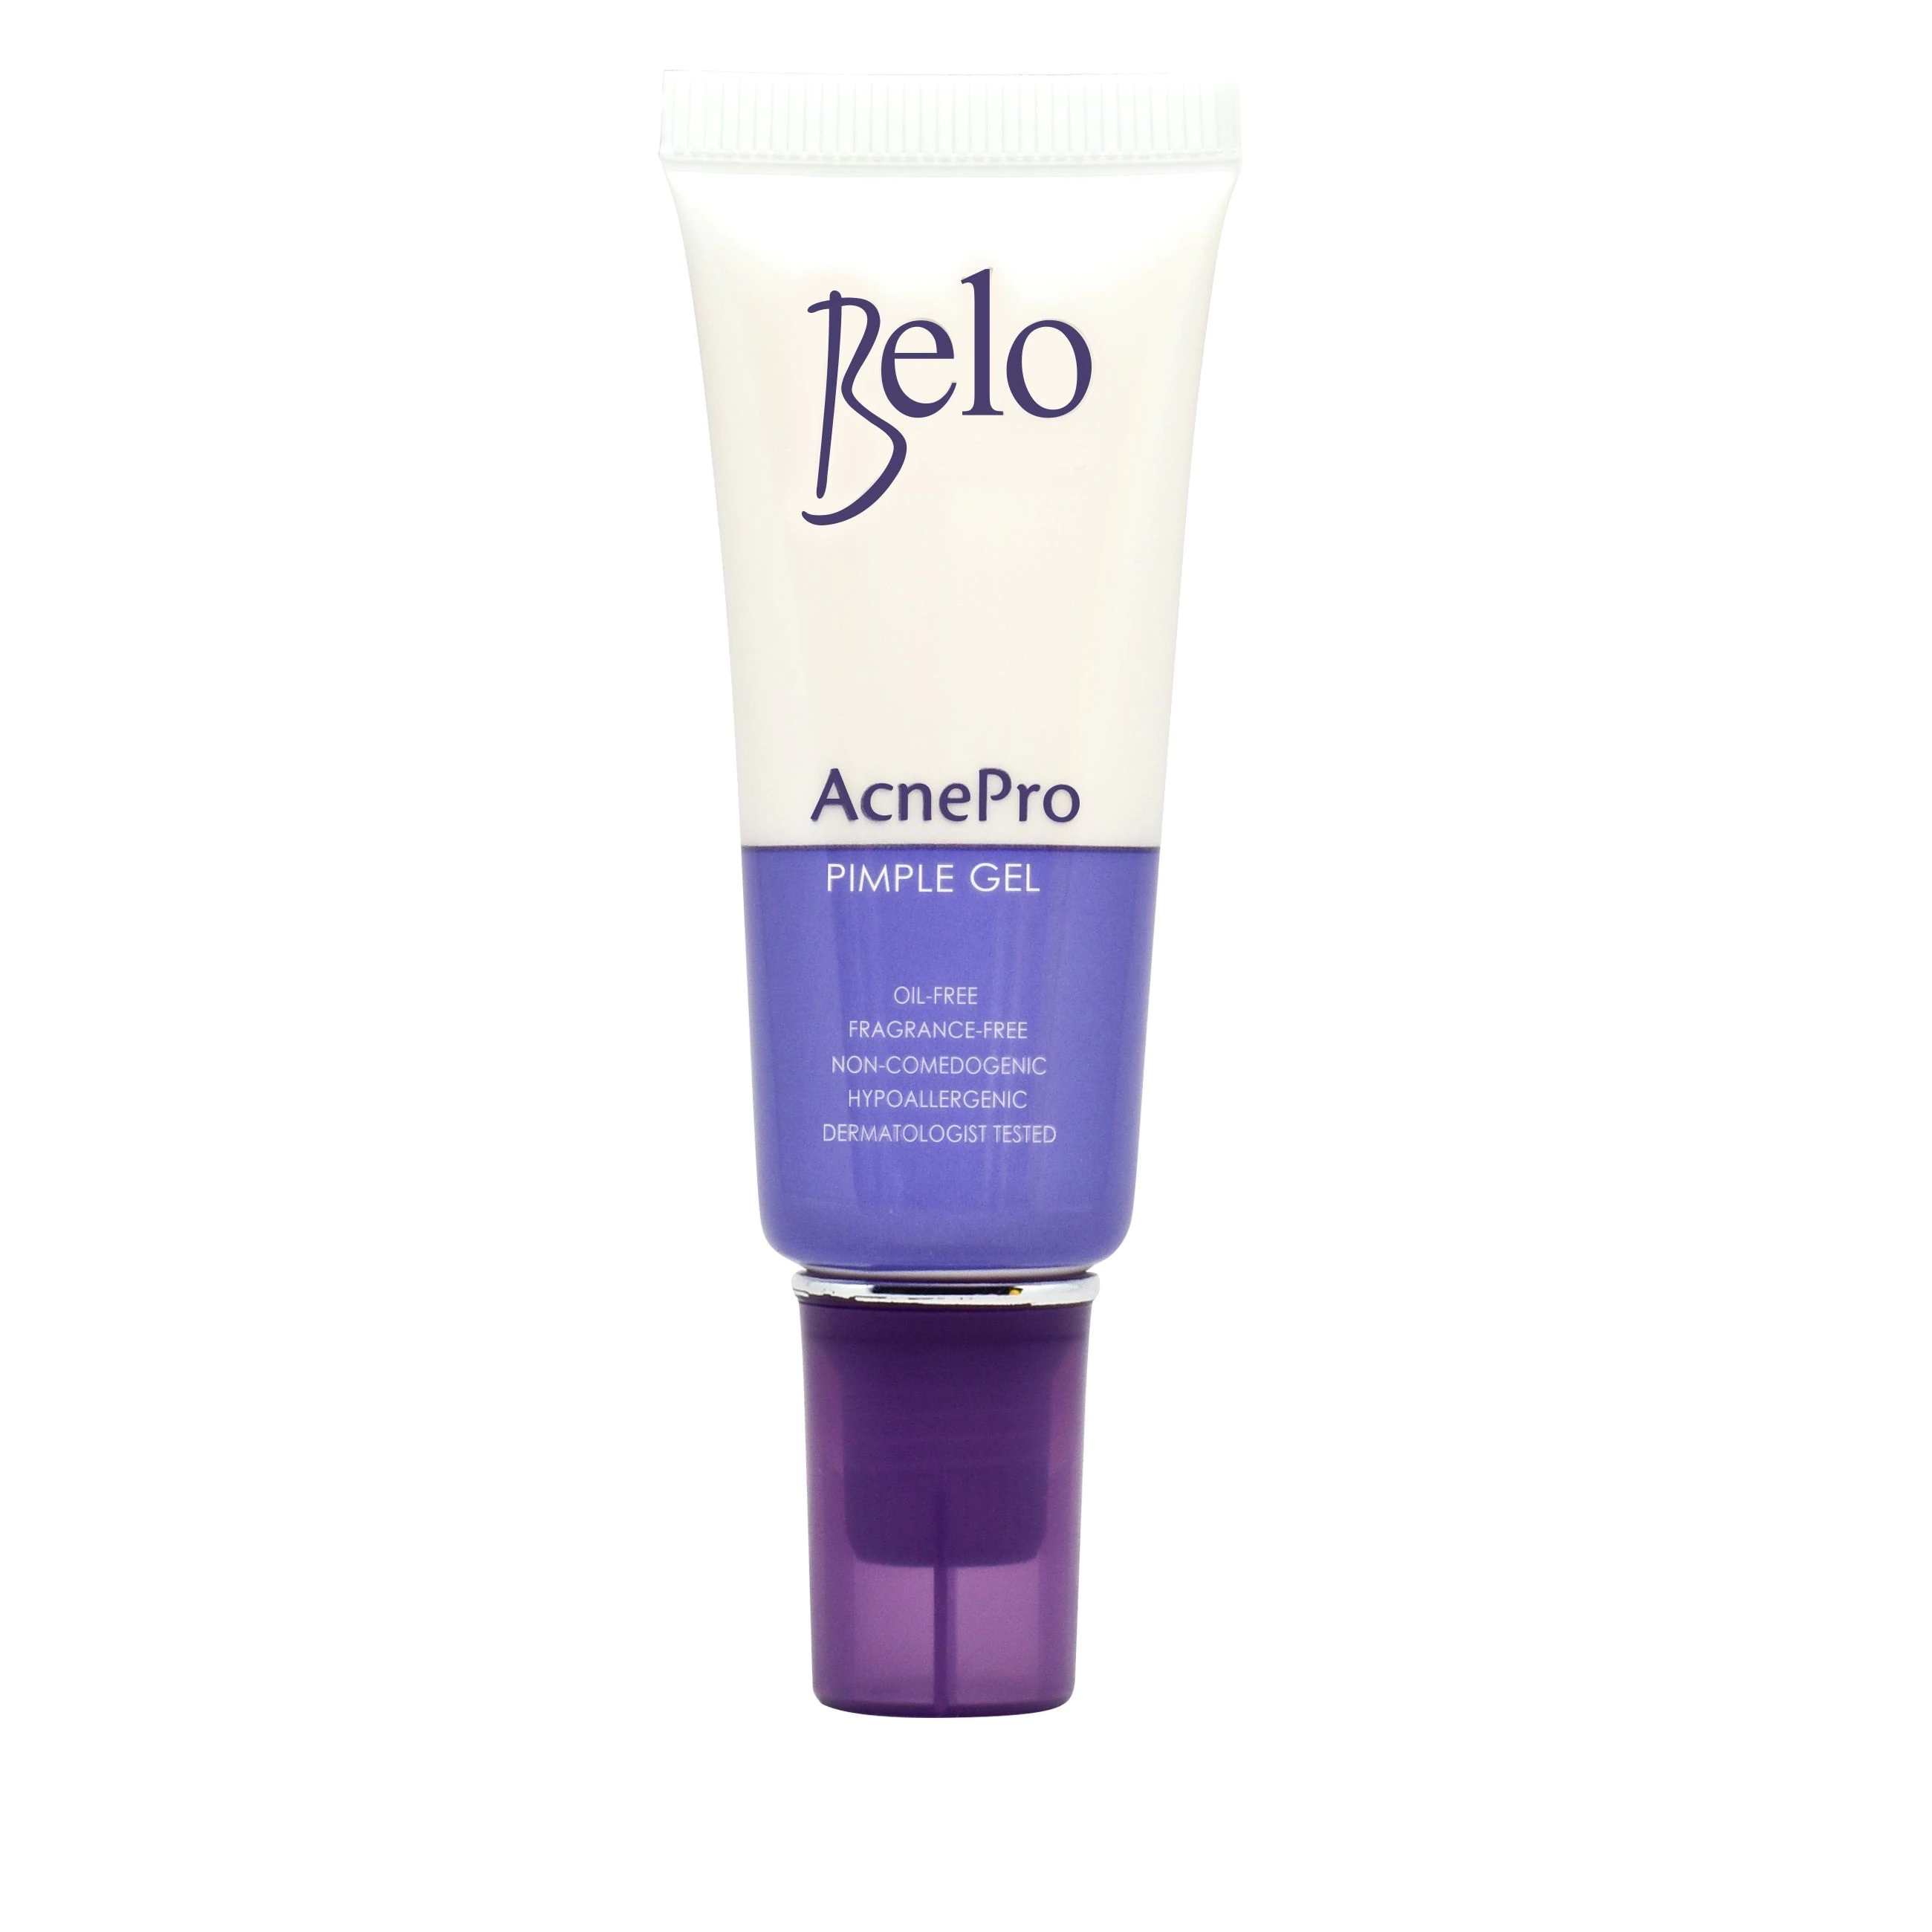 Belo Essentials AcnePro Pimple Gel Acne Treatment_1